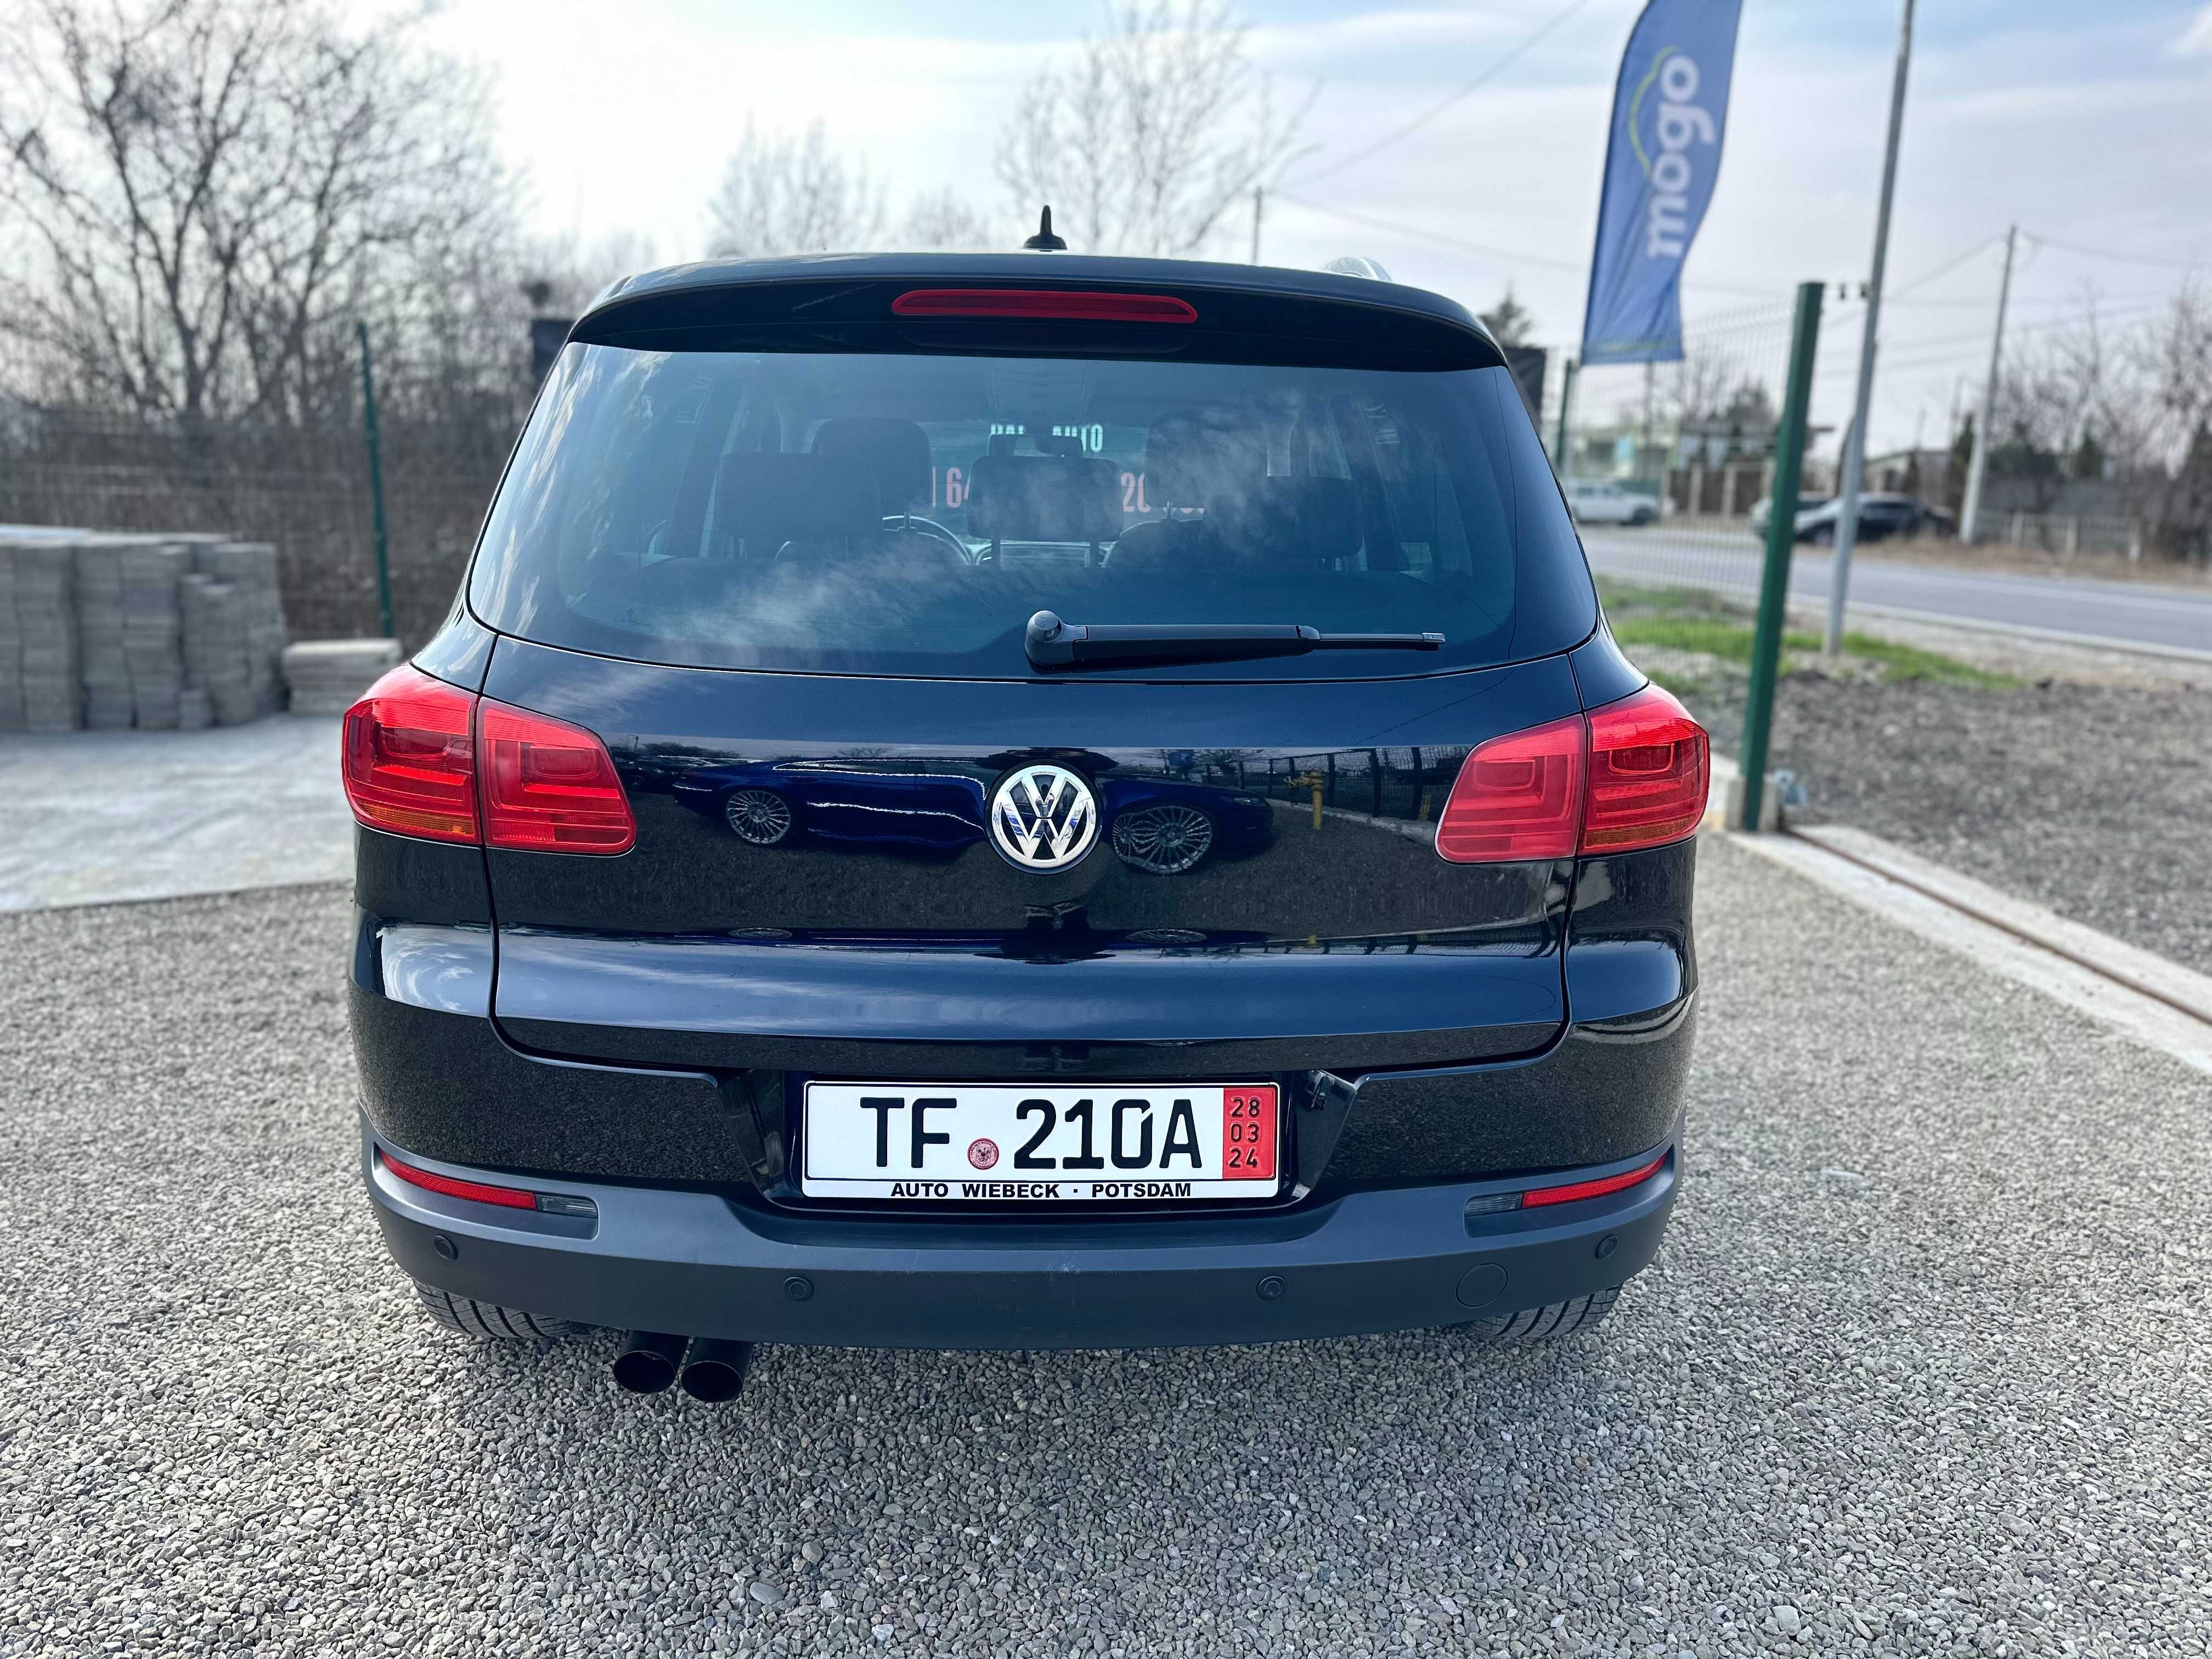 VW Tiguan - 4x4 - Rate fara Avans